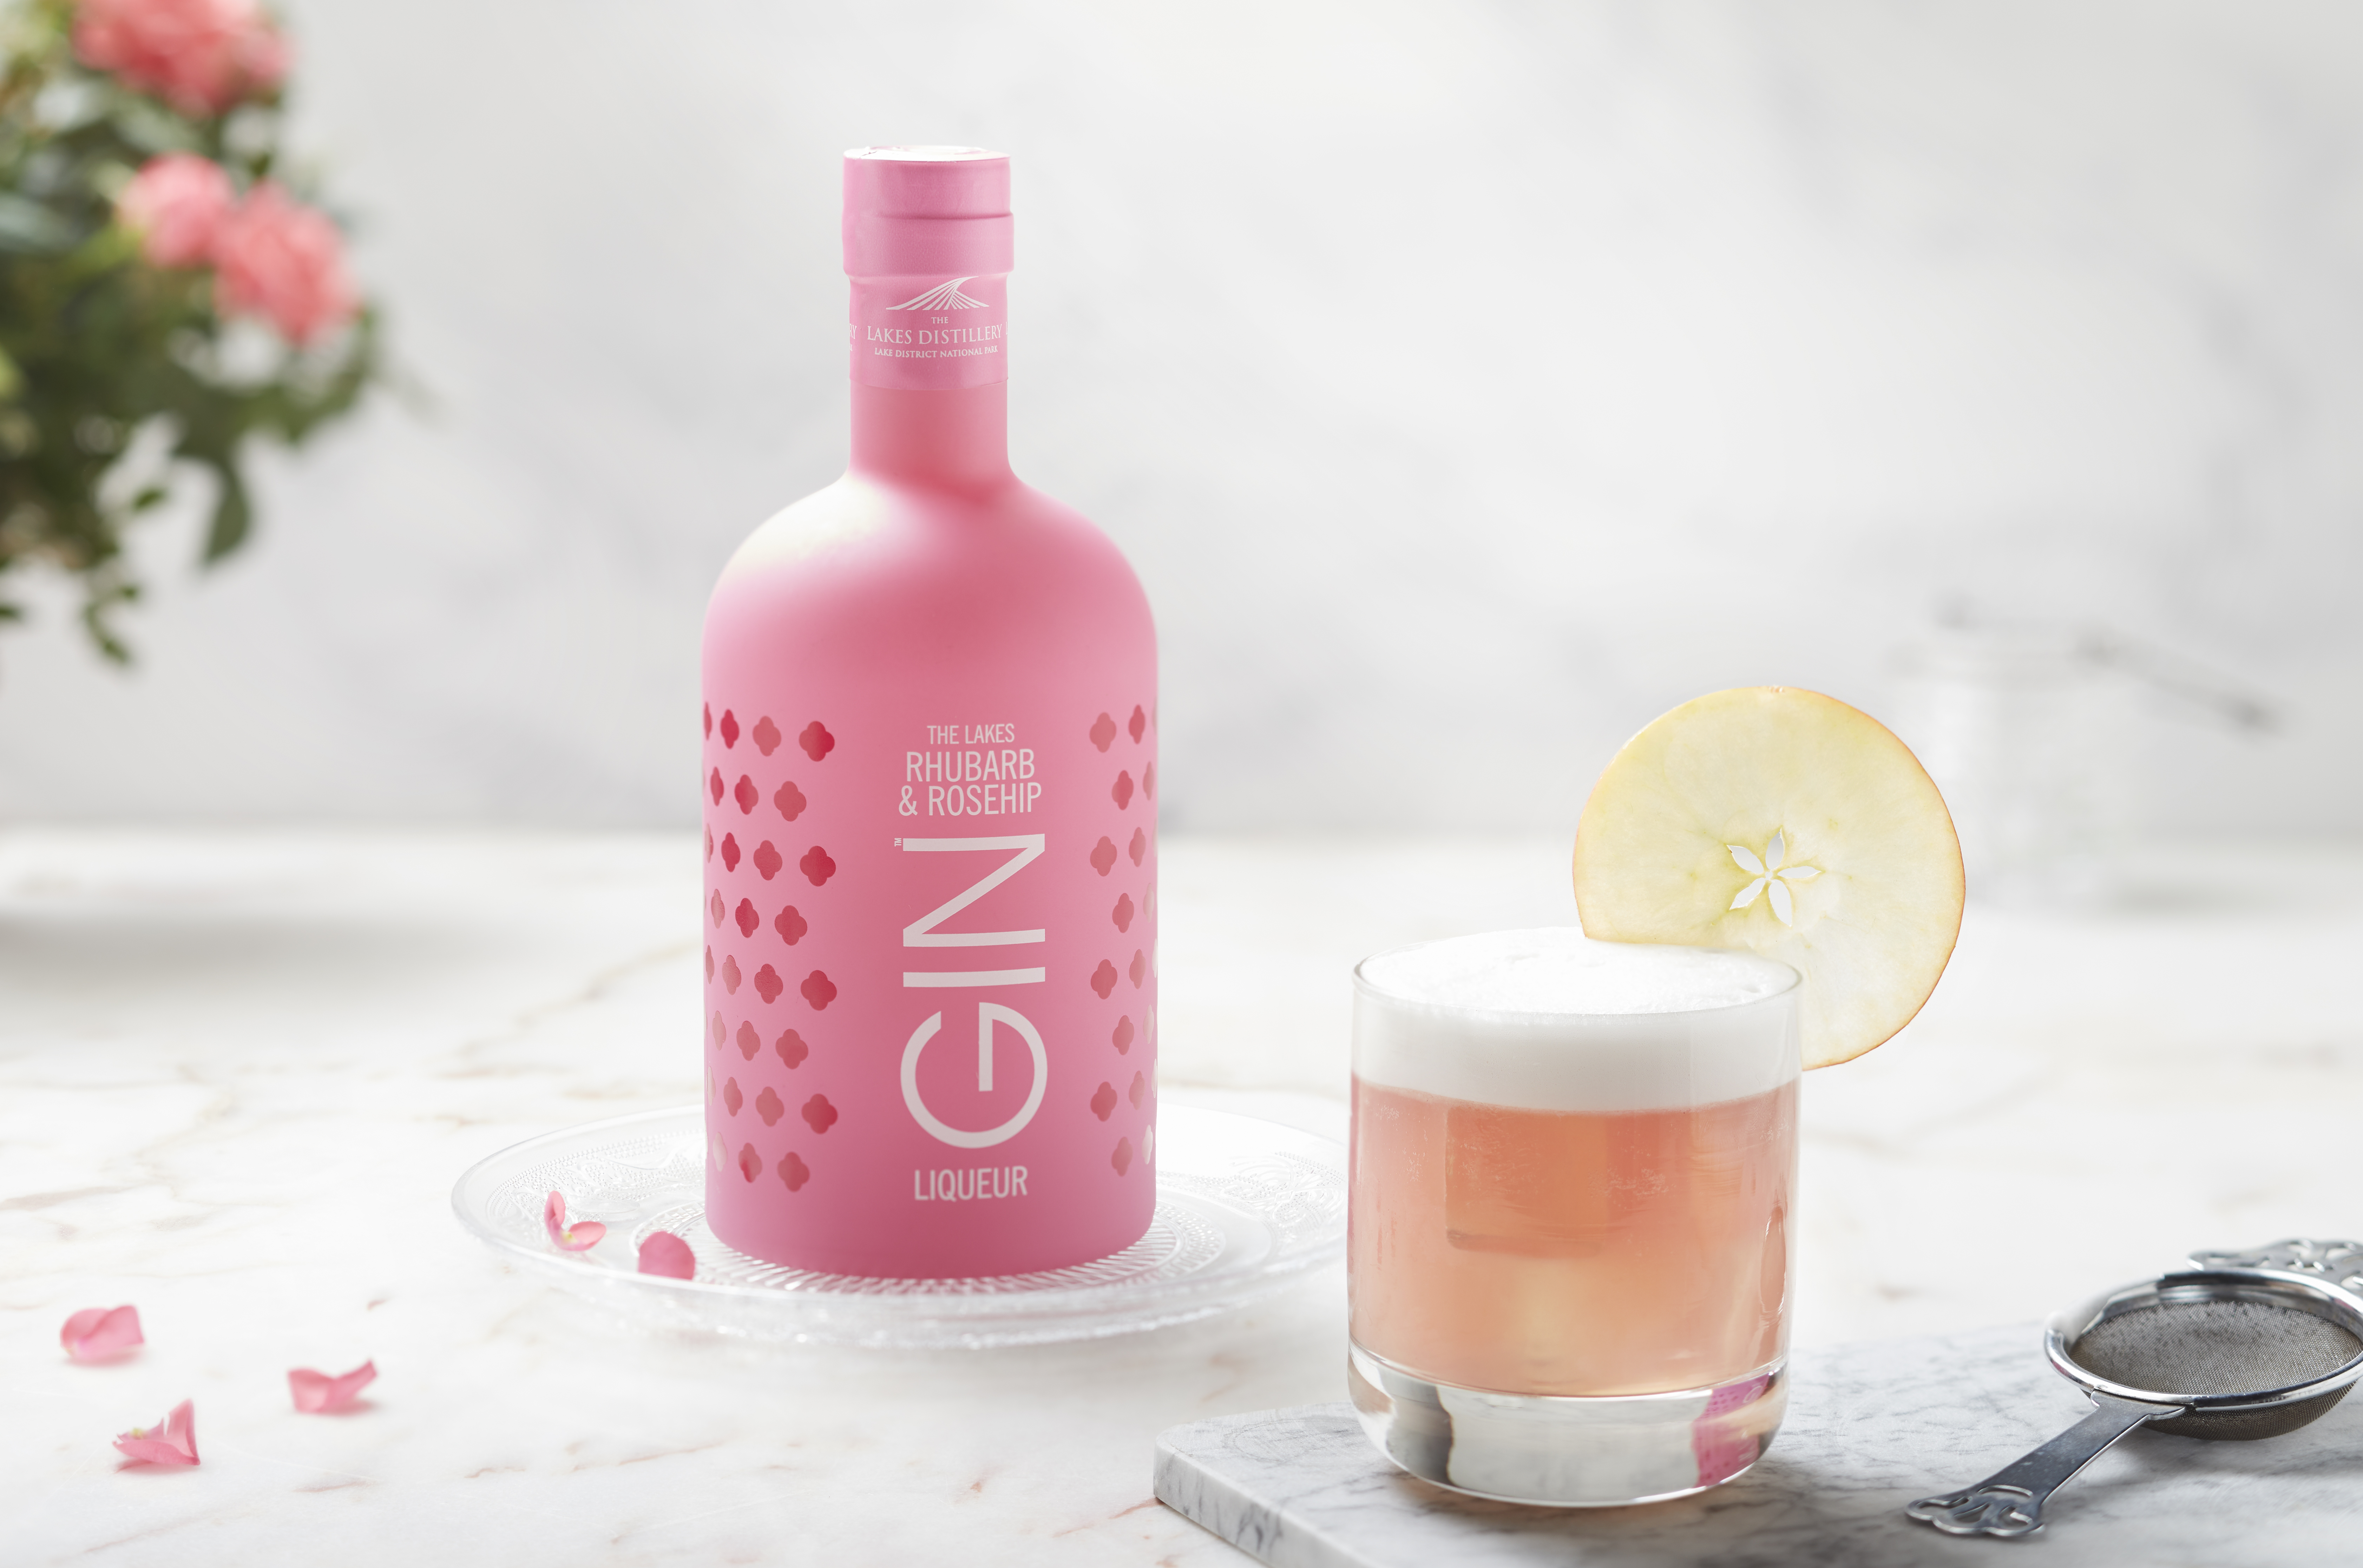 Lakes Rhubarb & Rosehip Pink Lady Cocktail